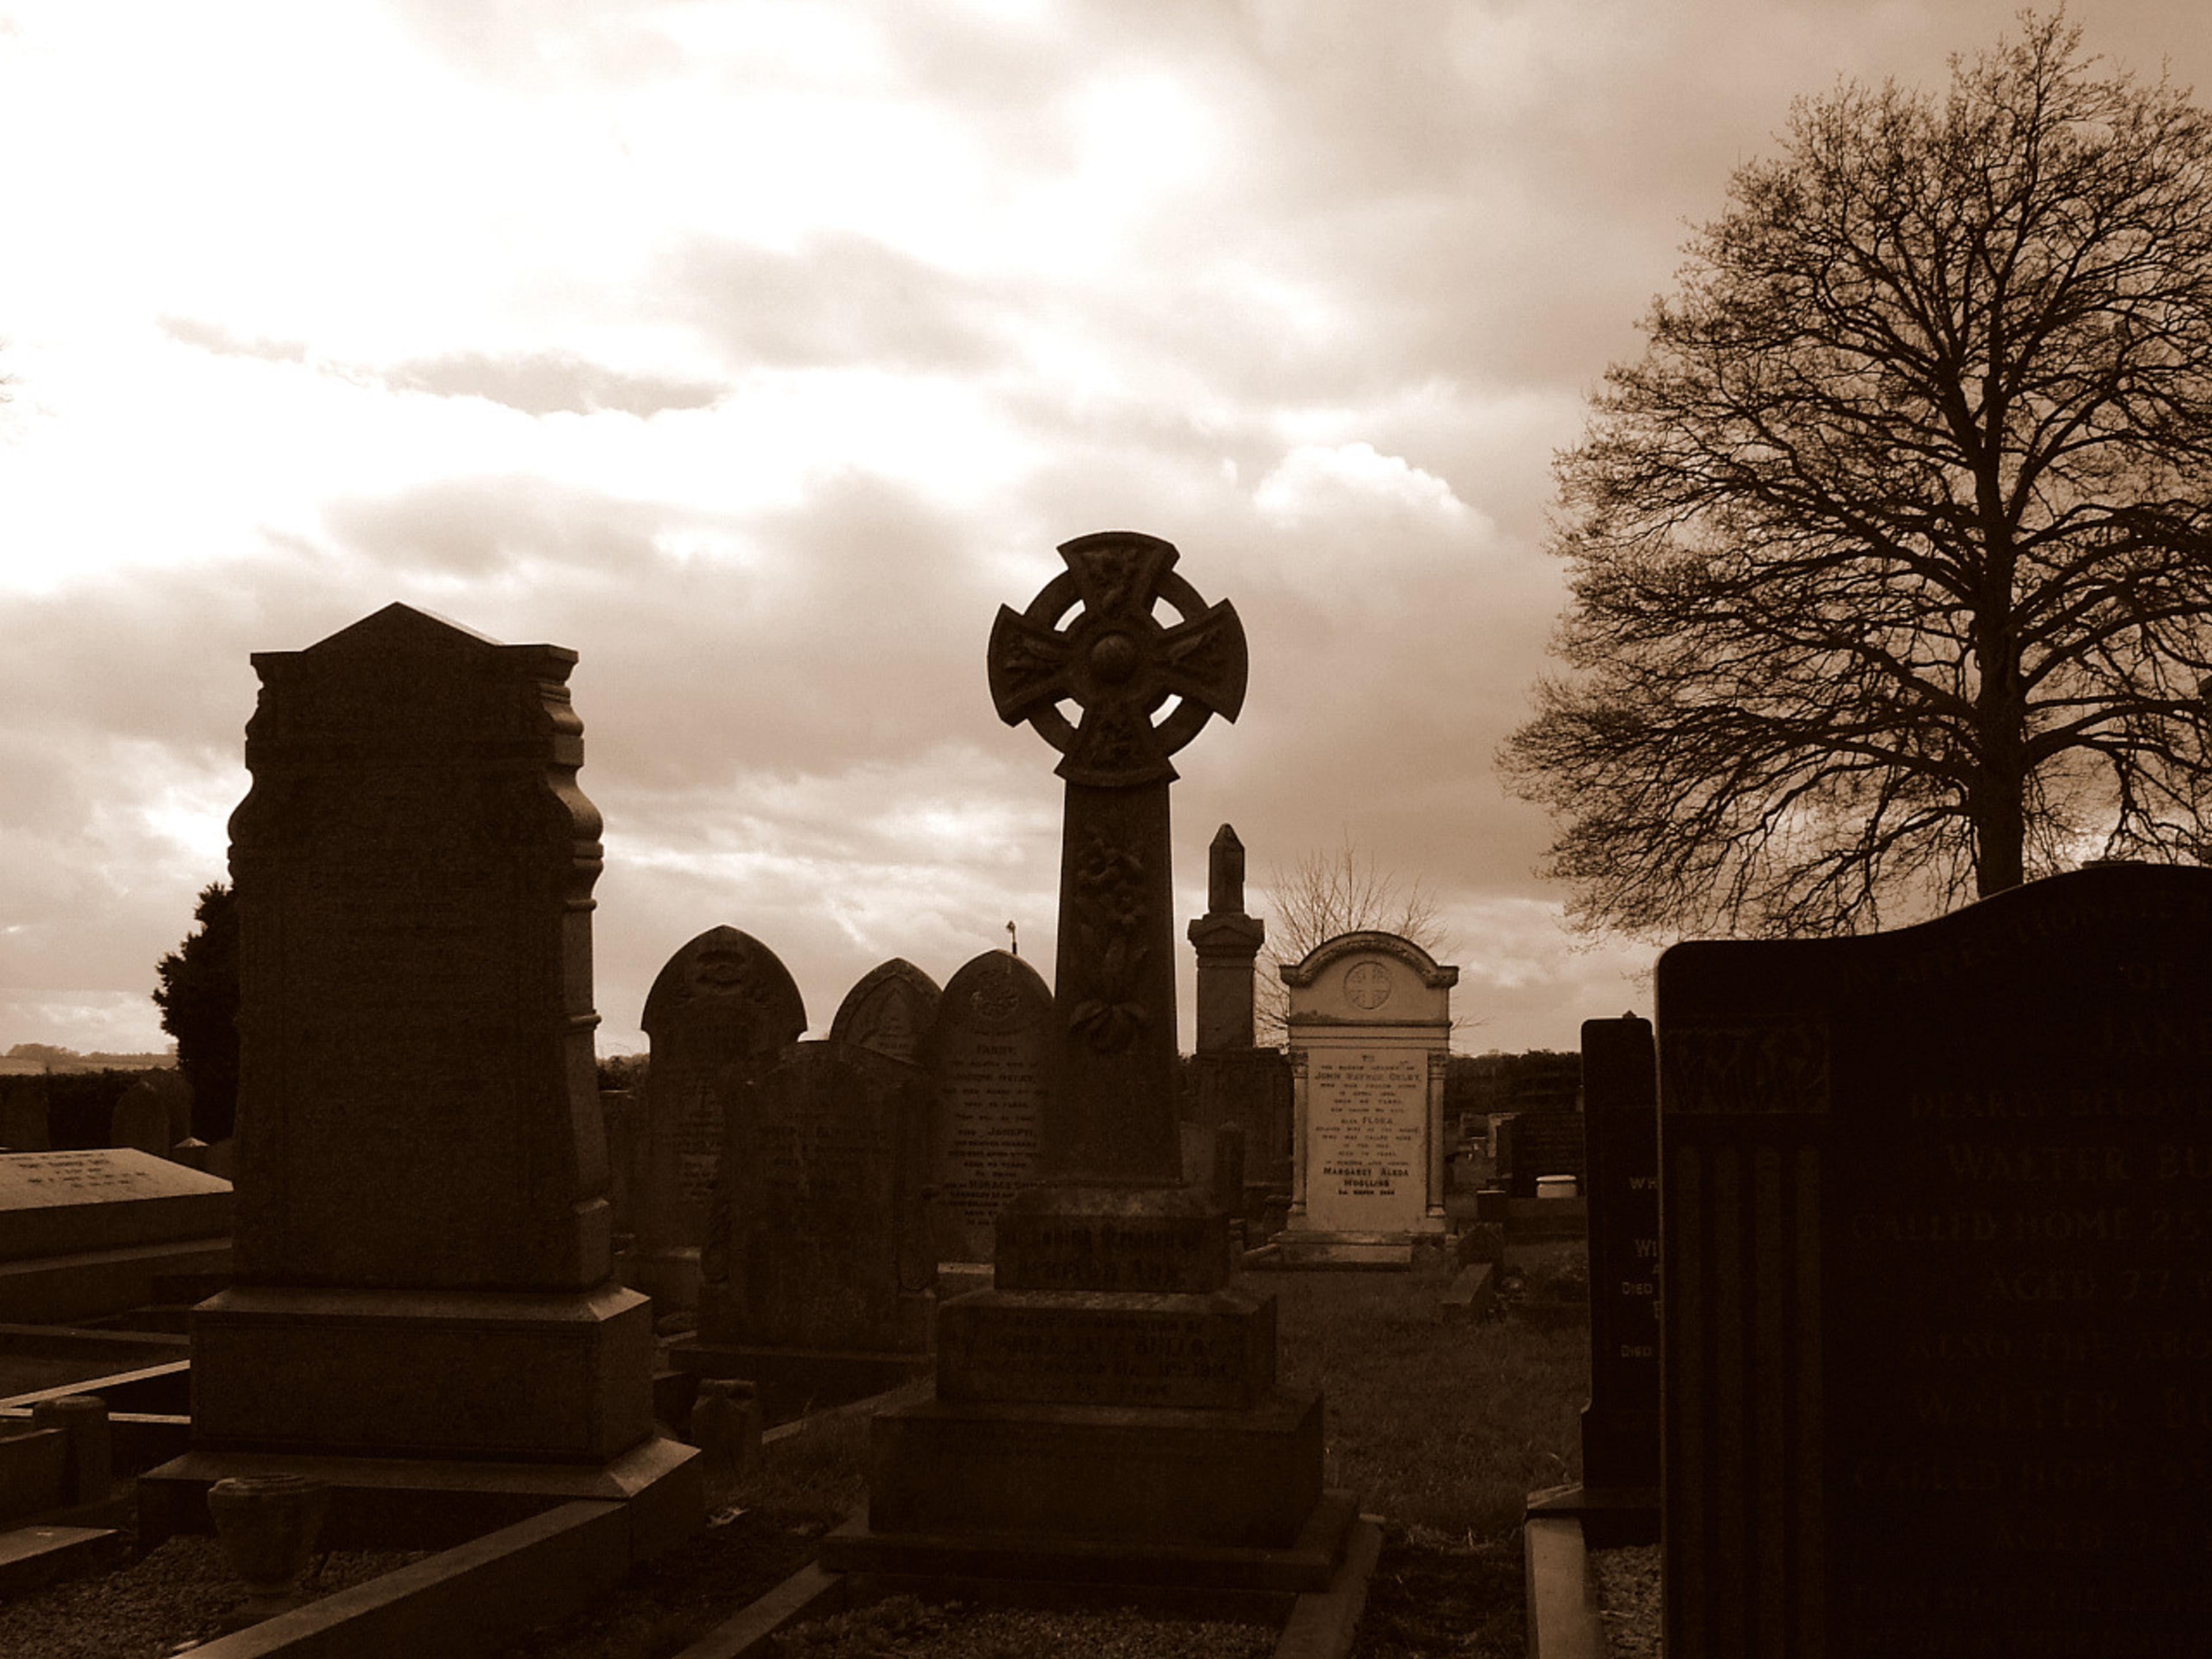 Кладбища в Англии 20 века